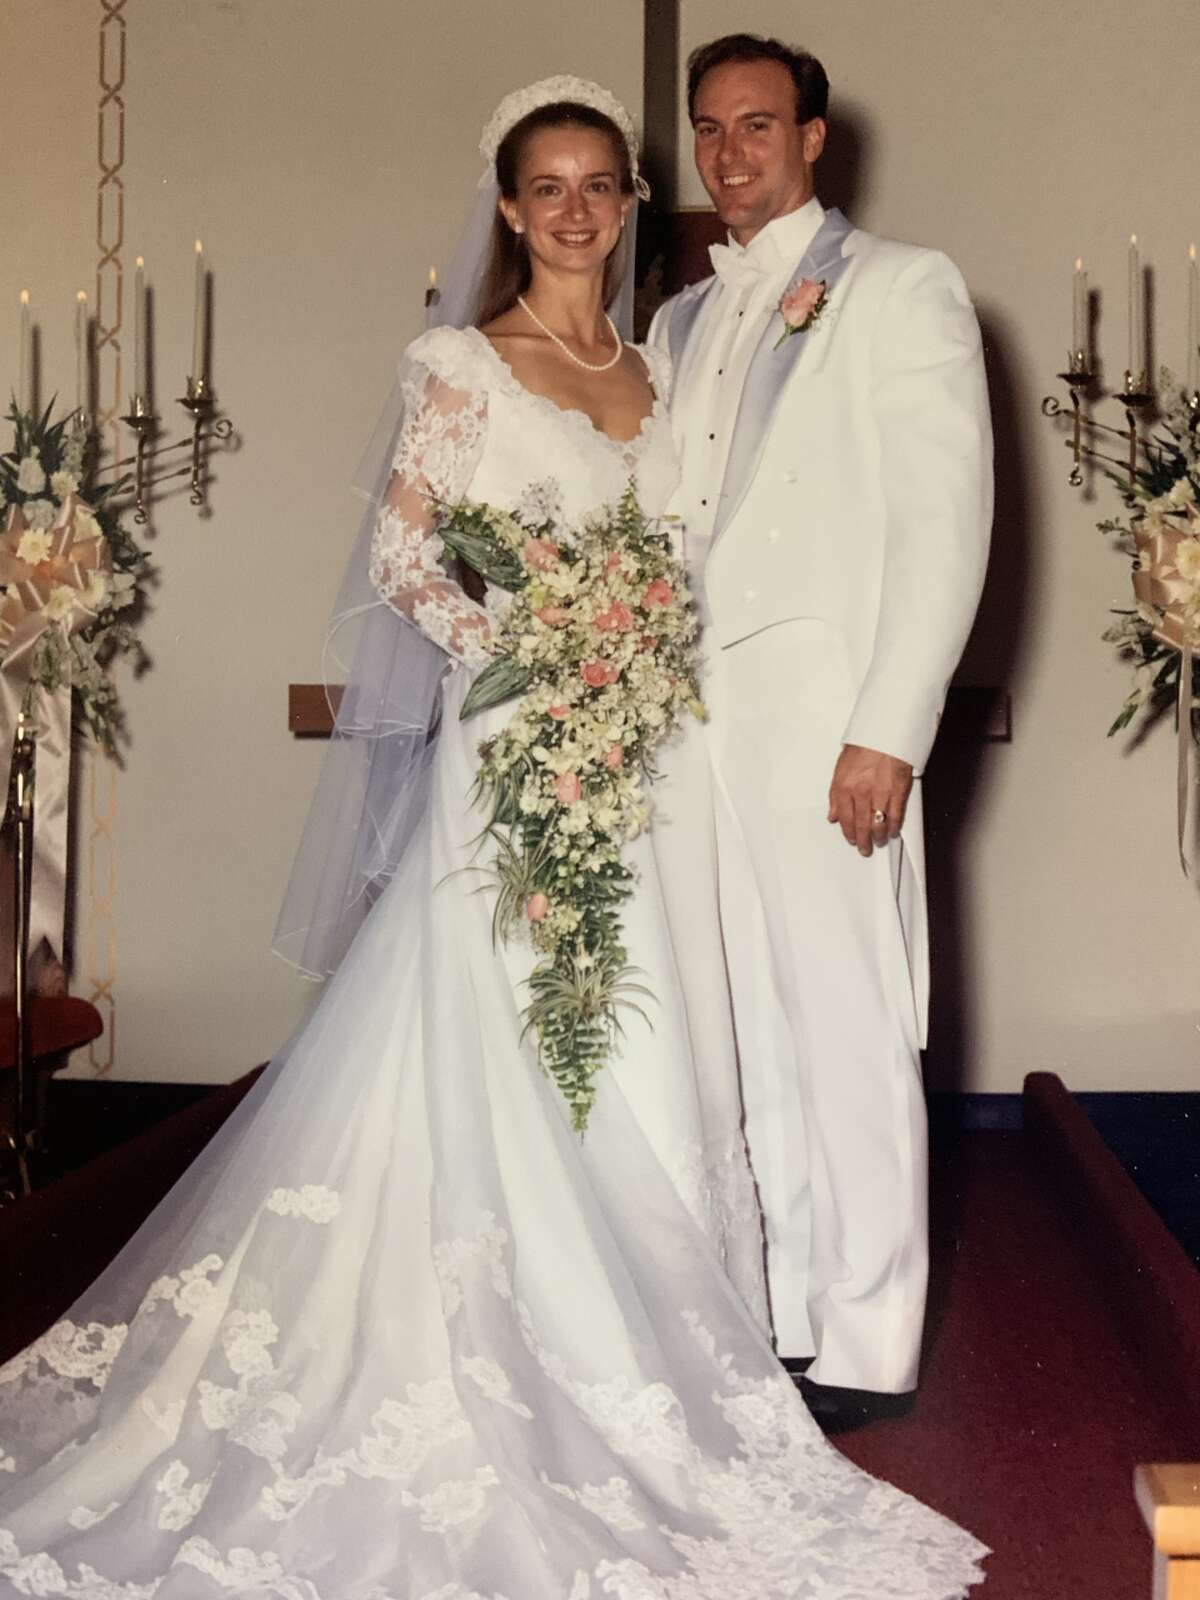 Ann and Jeff Priesmeyer at their wedding